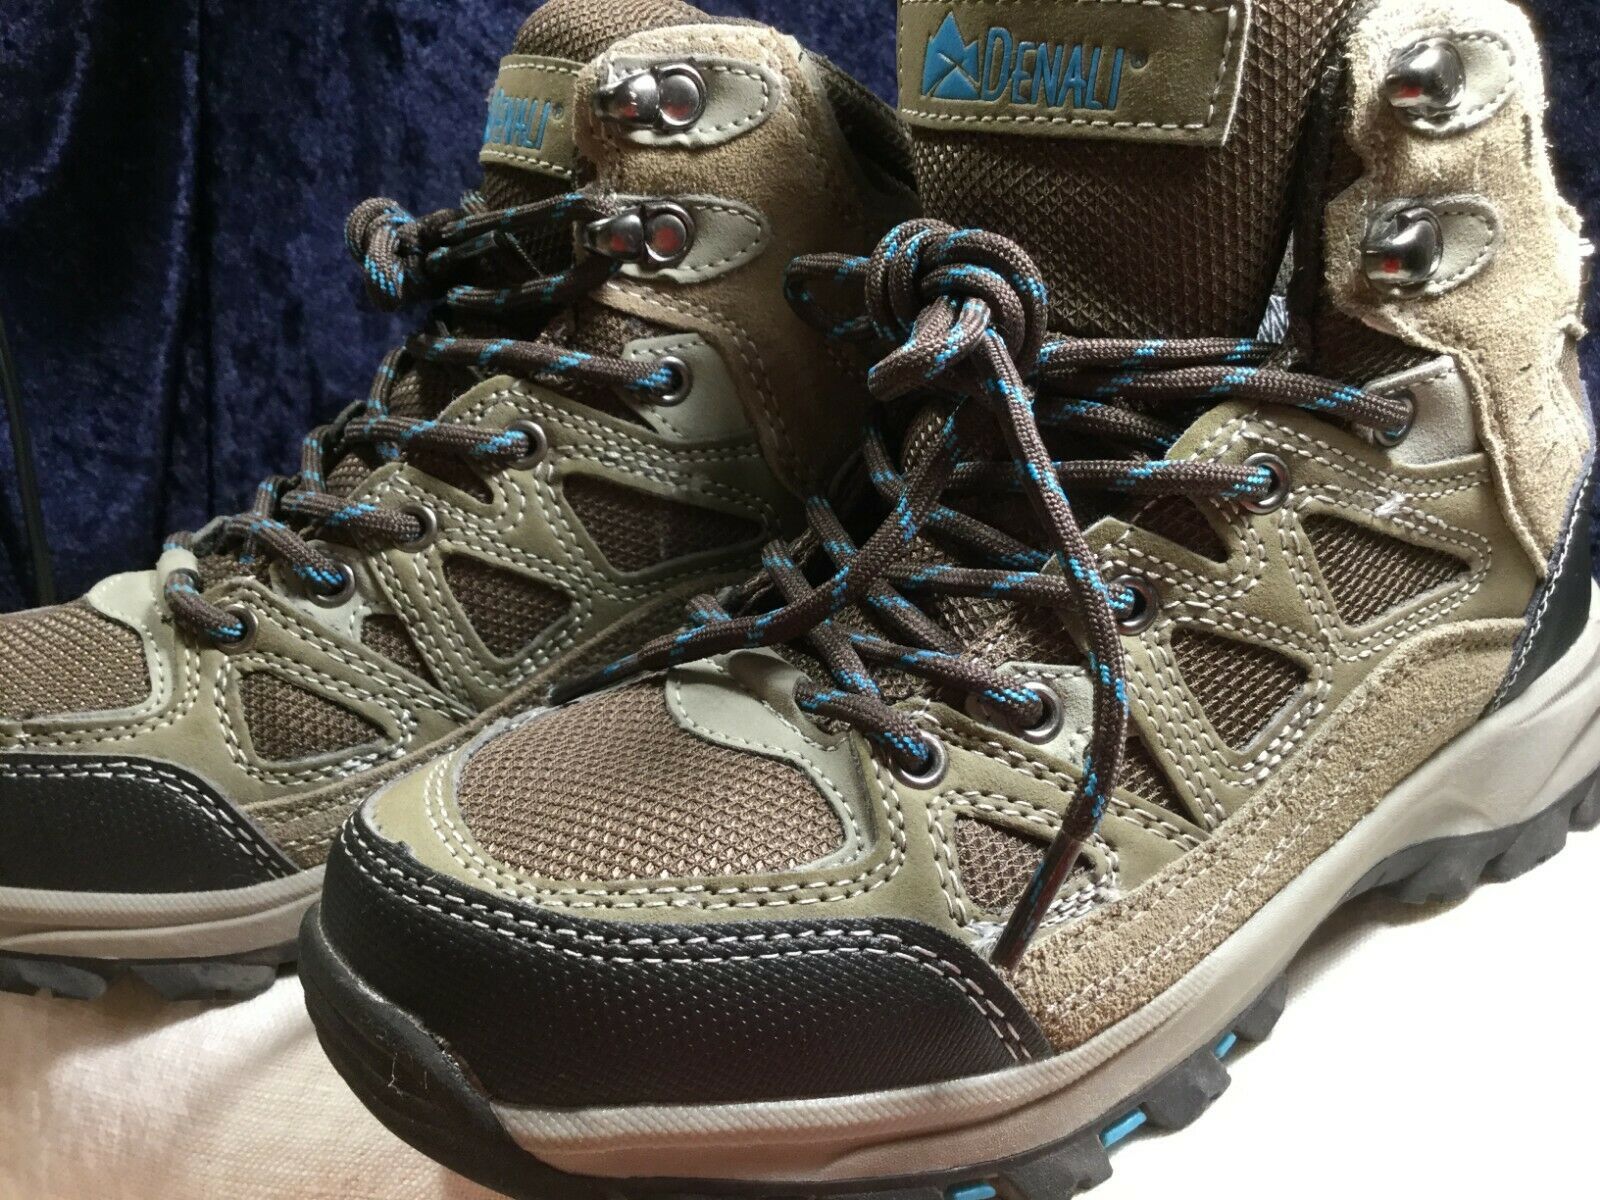 denali womens hiking boots